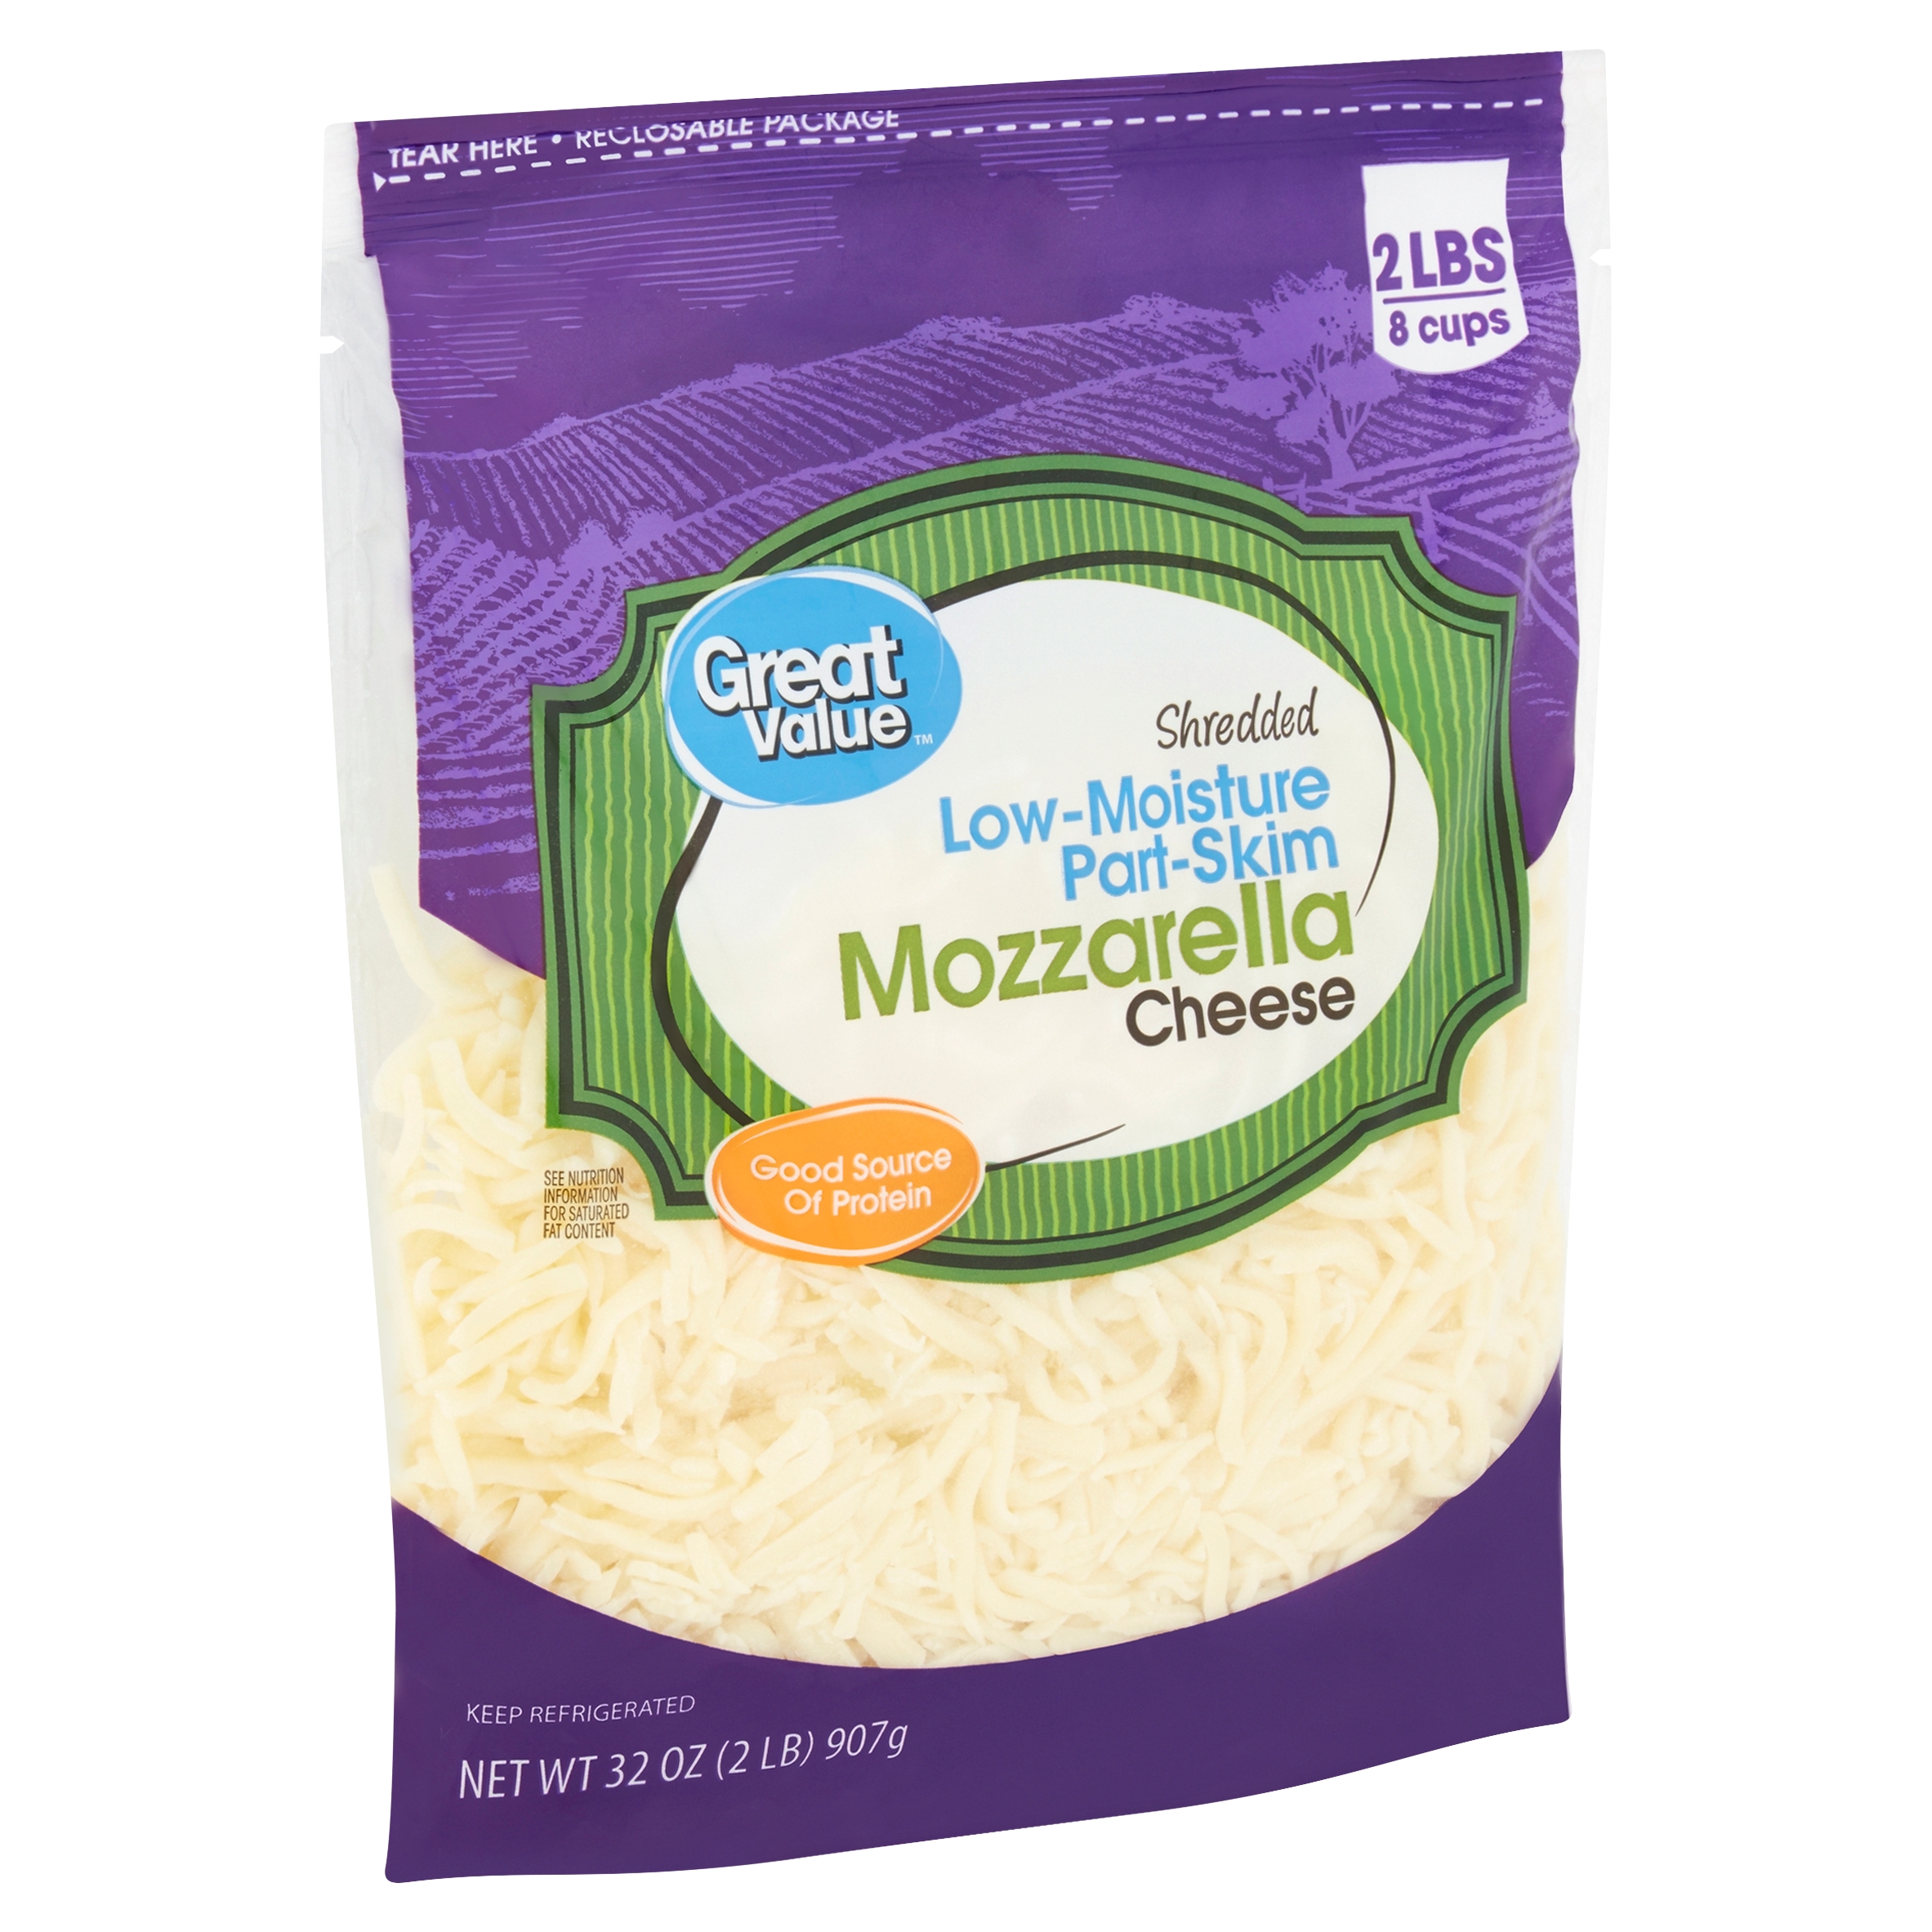 Great Value Shredded Low-Moisture Part-Skim Mozzarella Cheese, 32 Oz Image